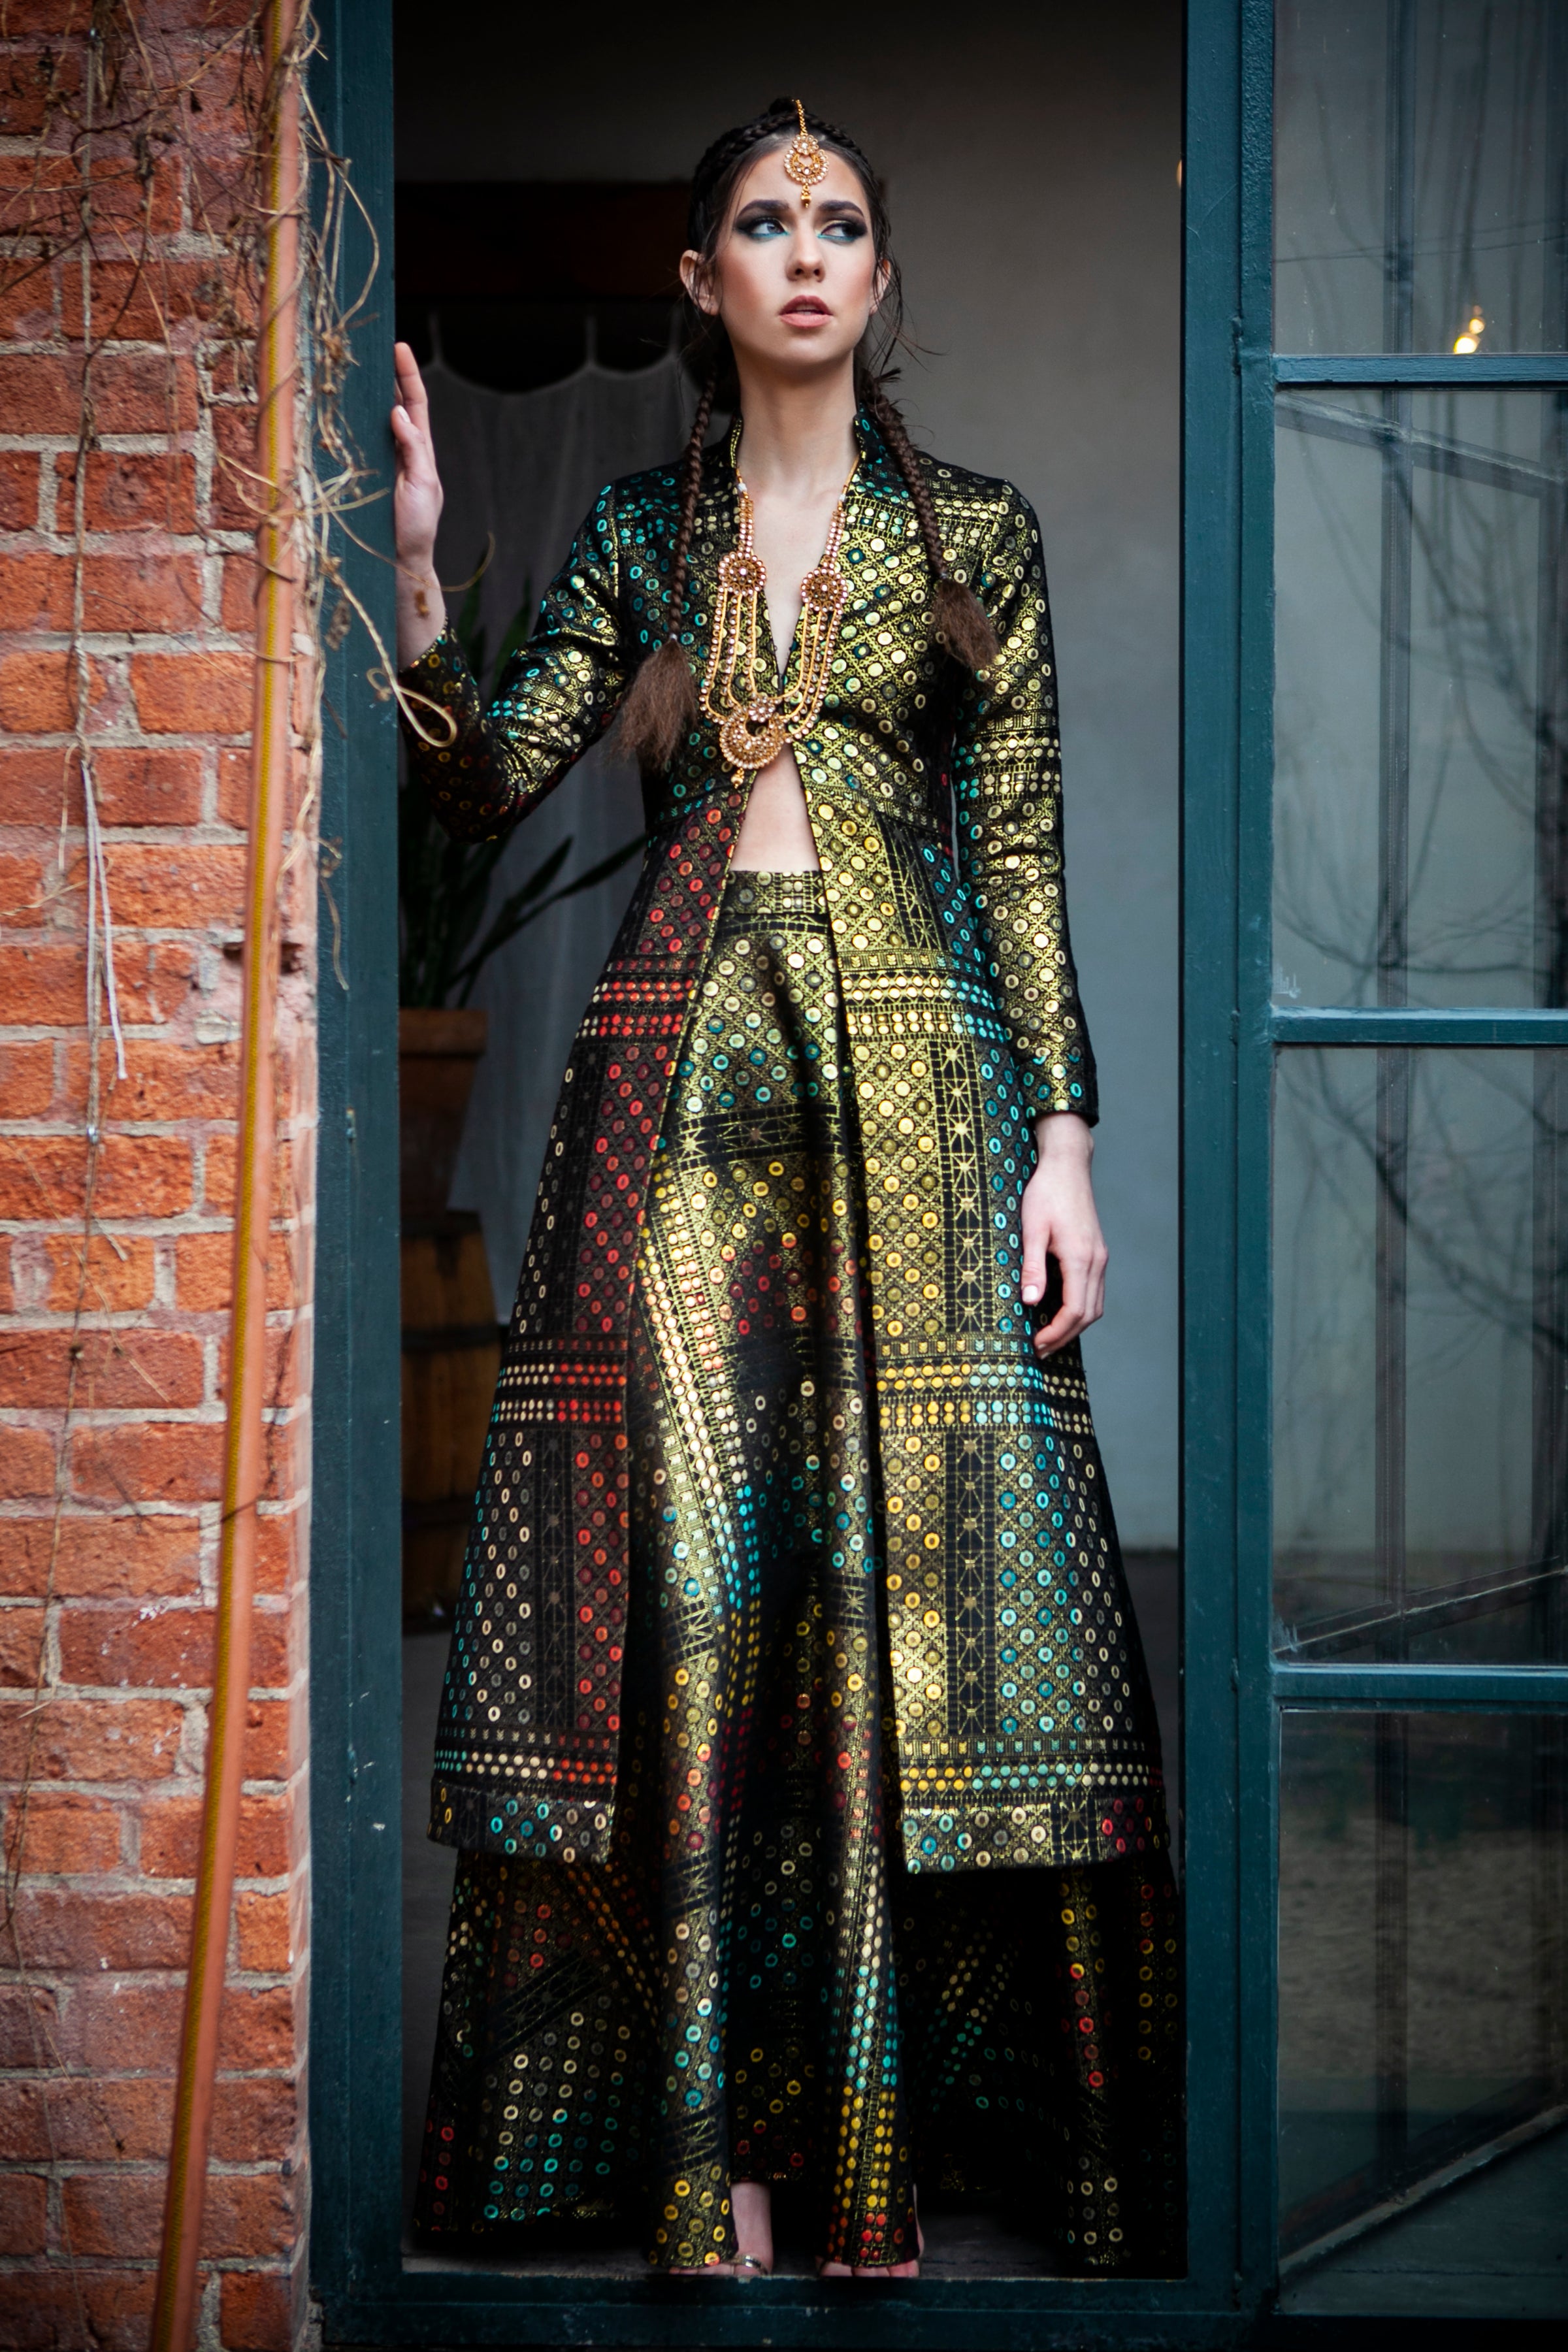 ANEELA Jacquard Skirt with Metallic and Rainbow Geometric Details - Front View - Harleen Kaur